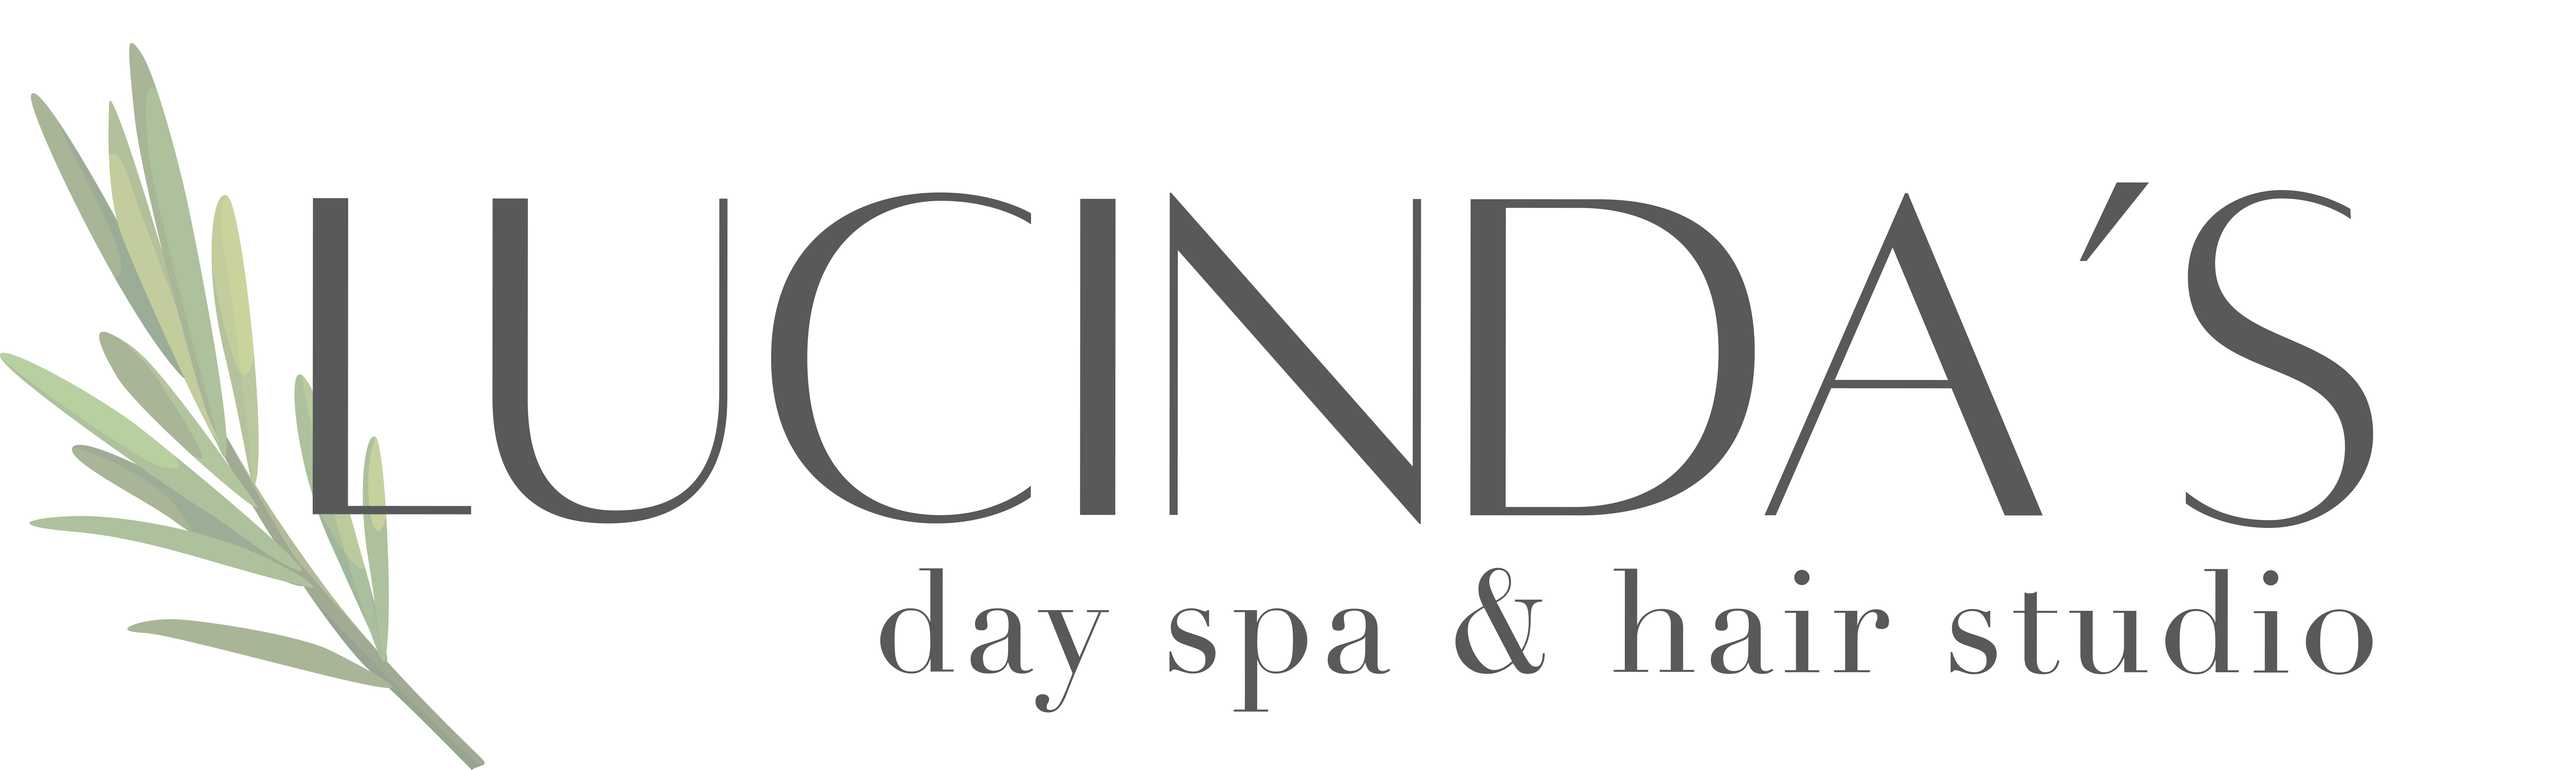 Lucinda's Day Spa and Hair Studio Logo